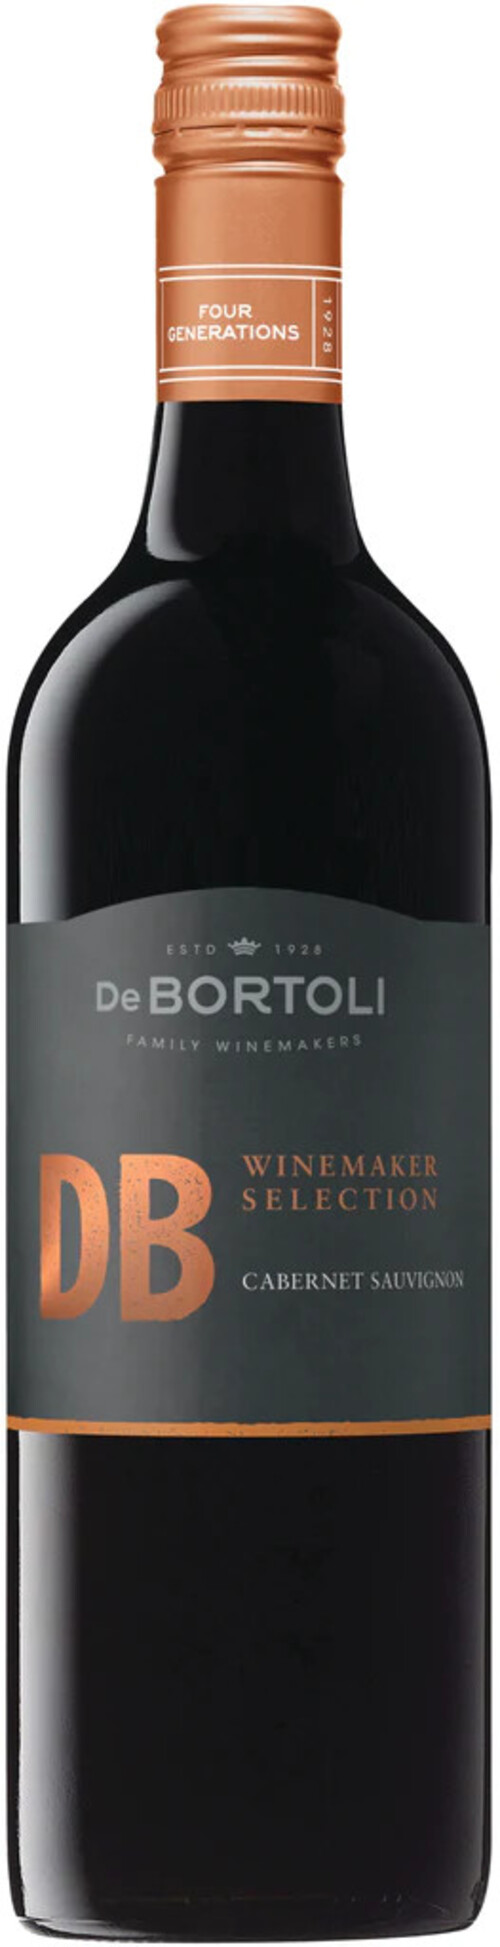 Rượu vang đỏ DB Winemakers Selection Cabernet Sauvignon  - 750 ml